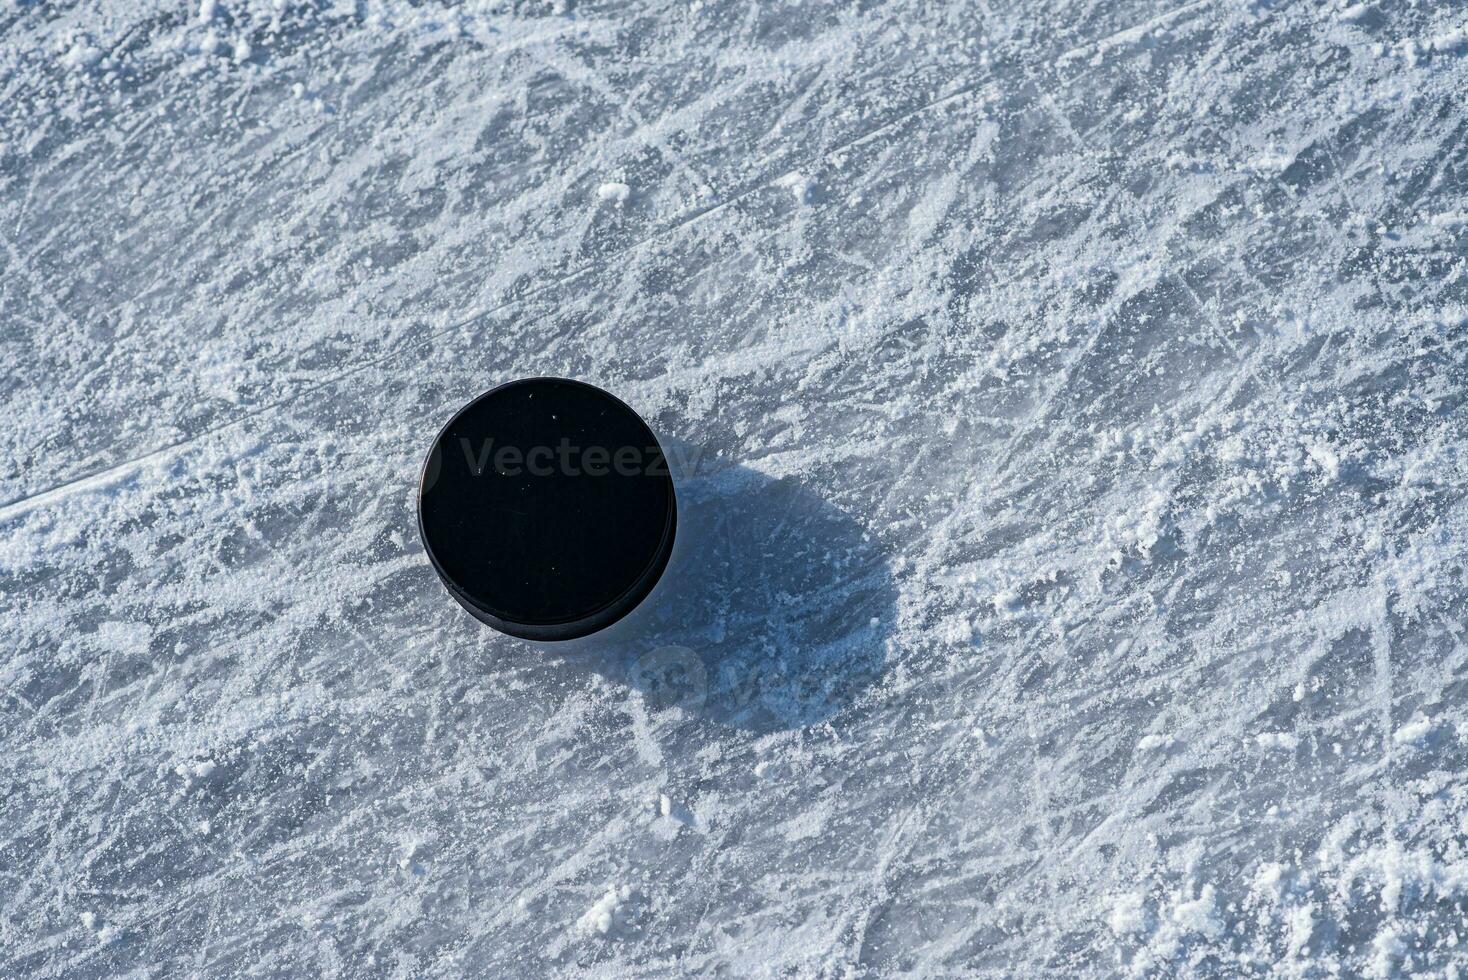 hockey puck lies on the snow close-up photo